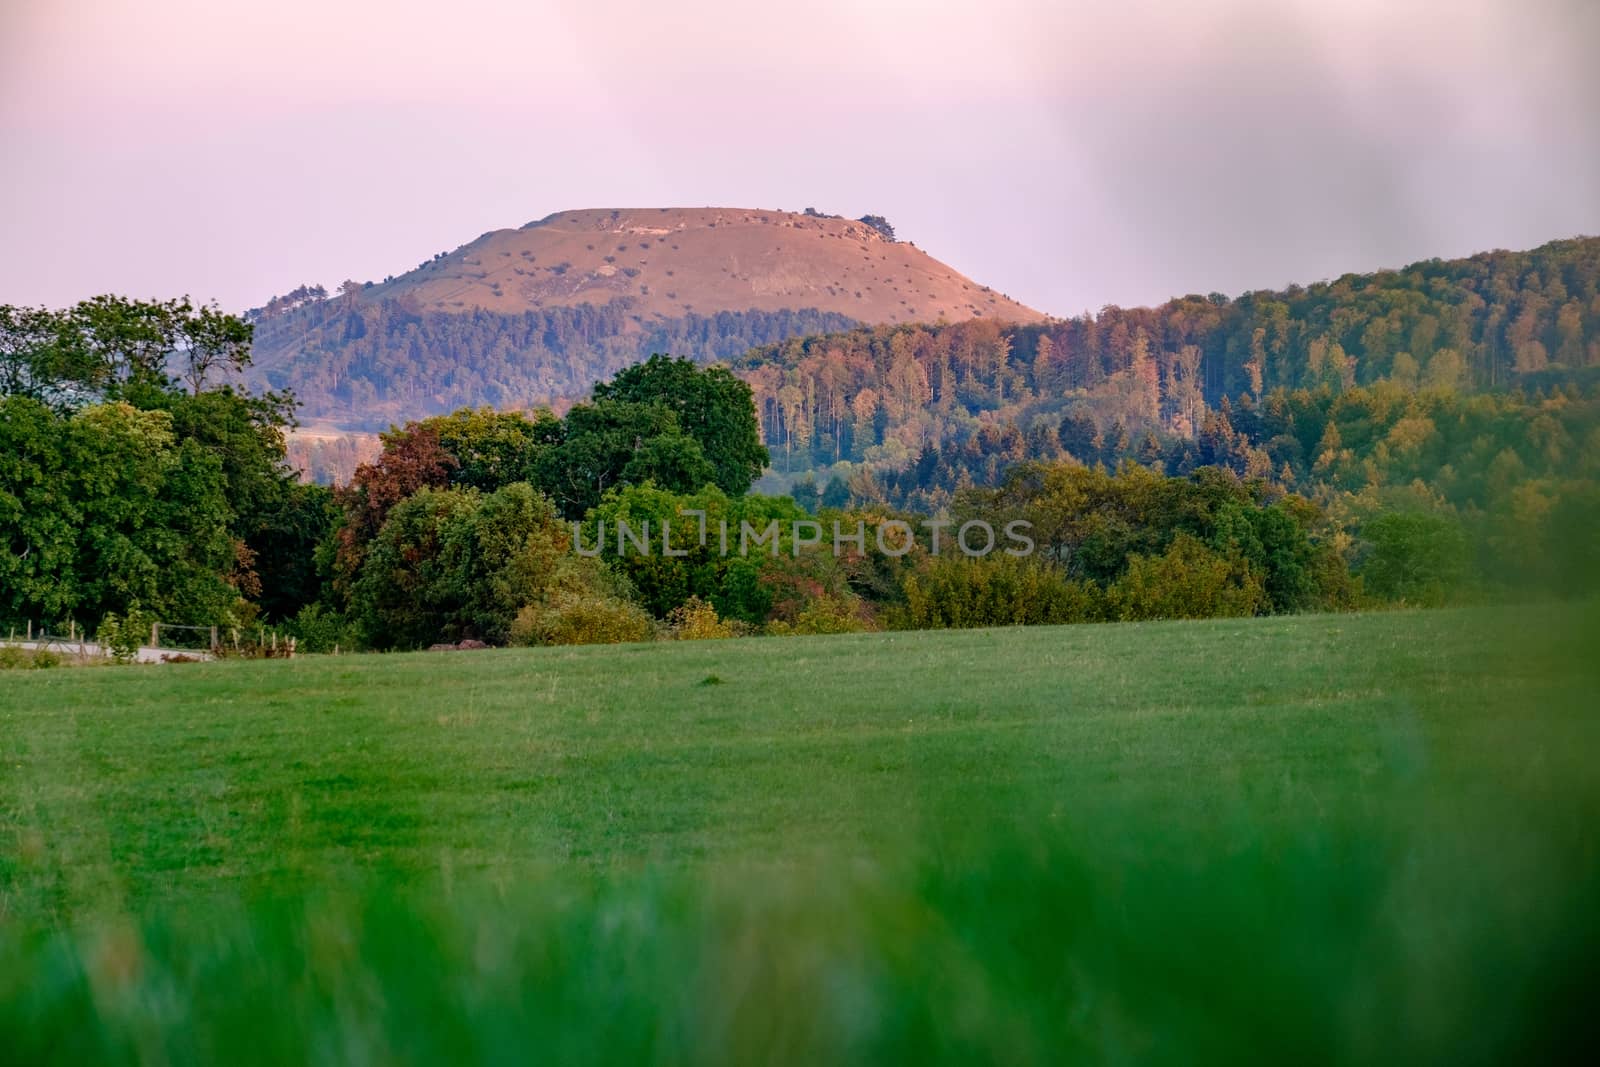 The famous hill Ipf near town Bopfingen by w20er